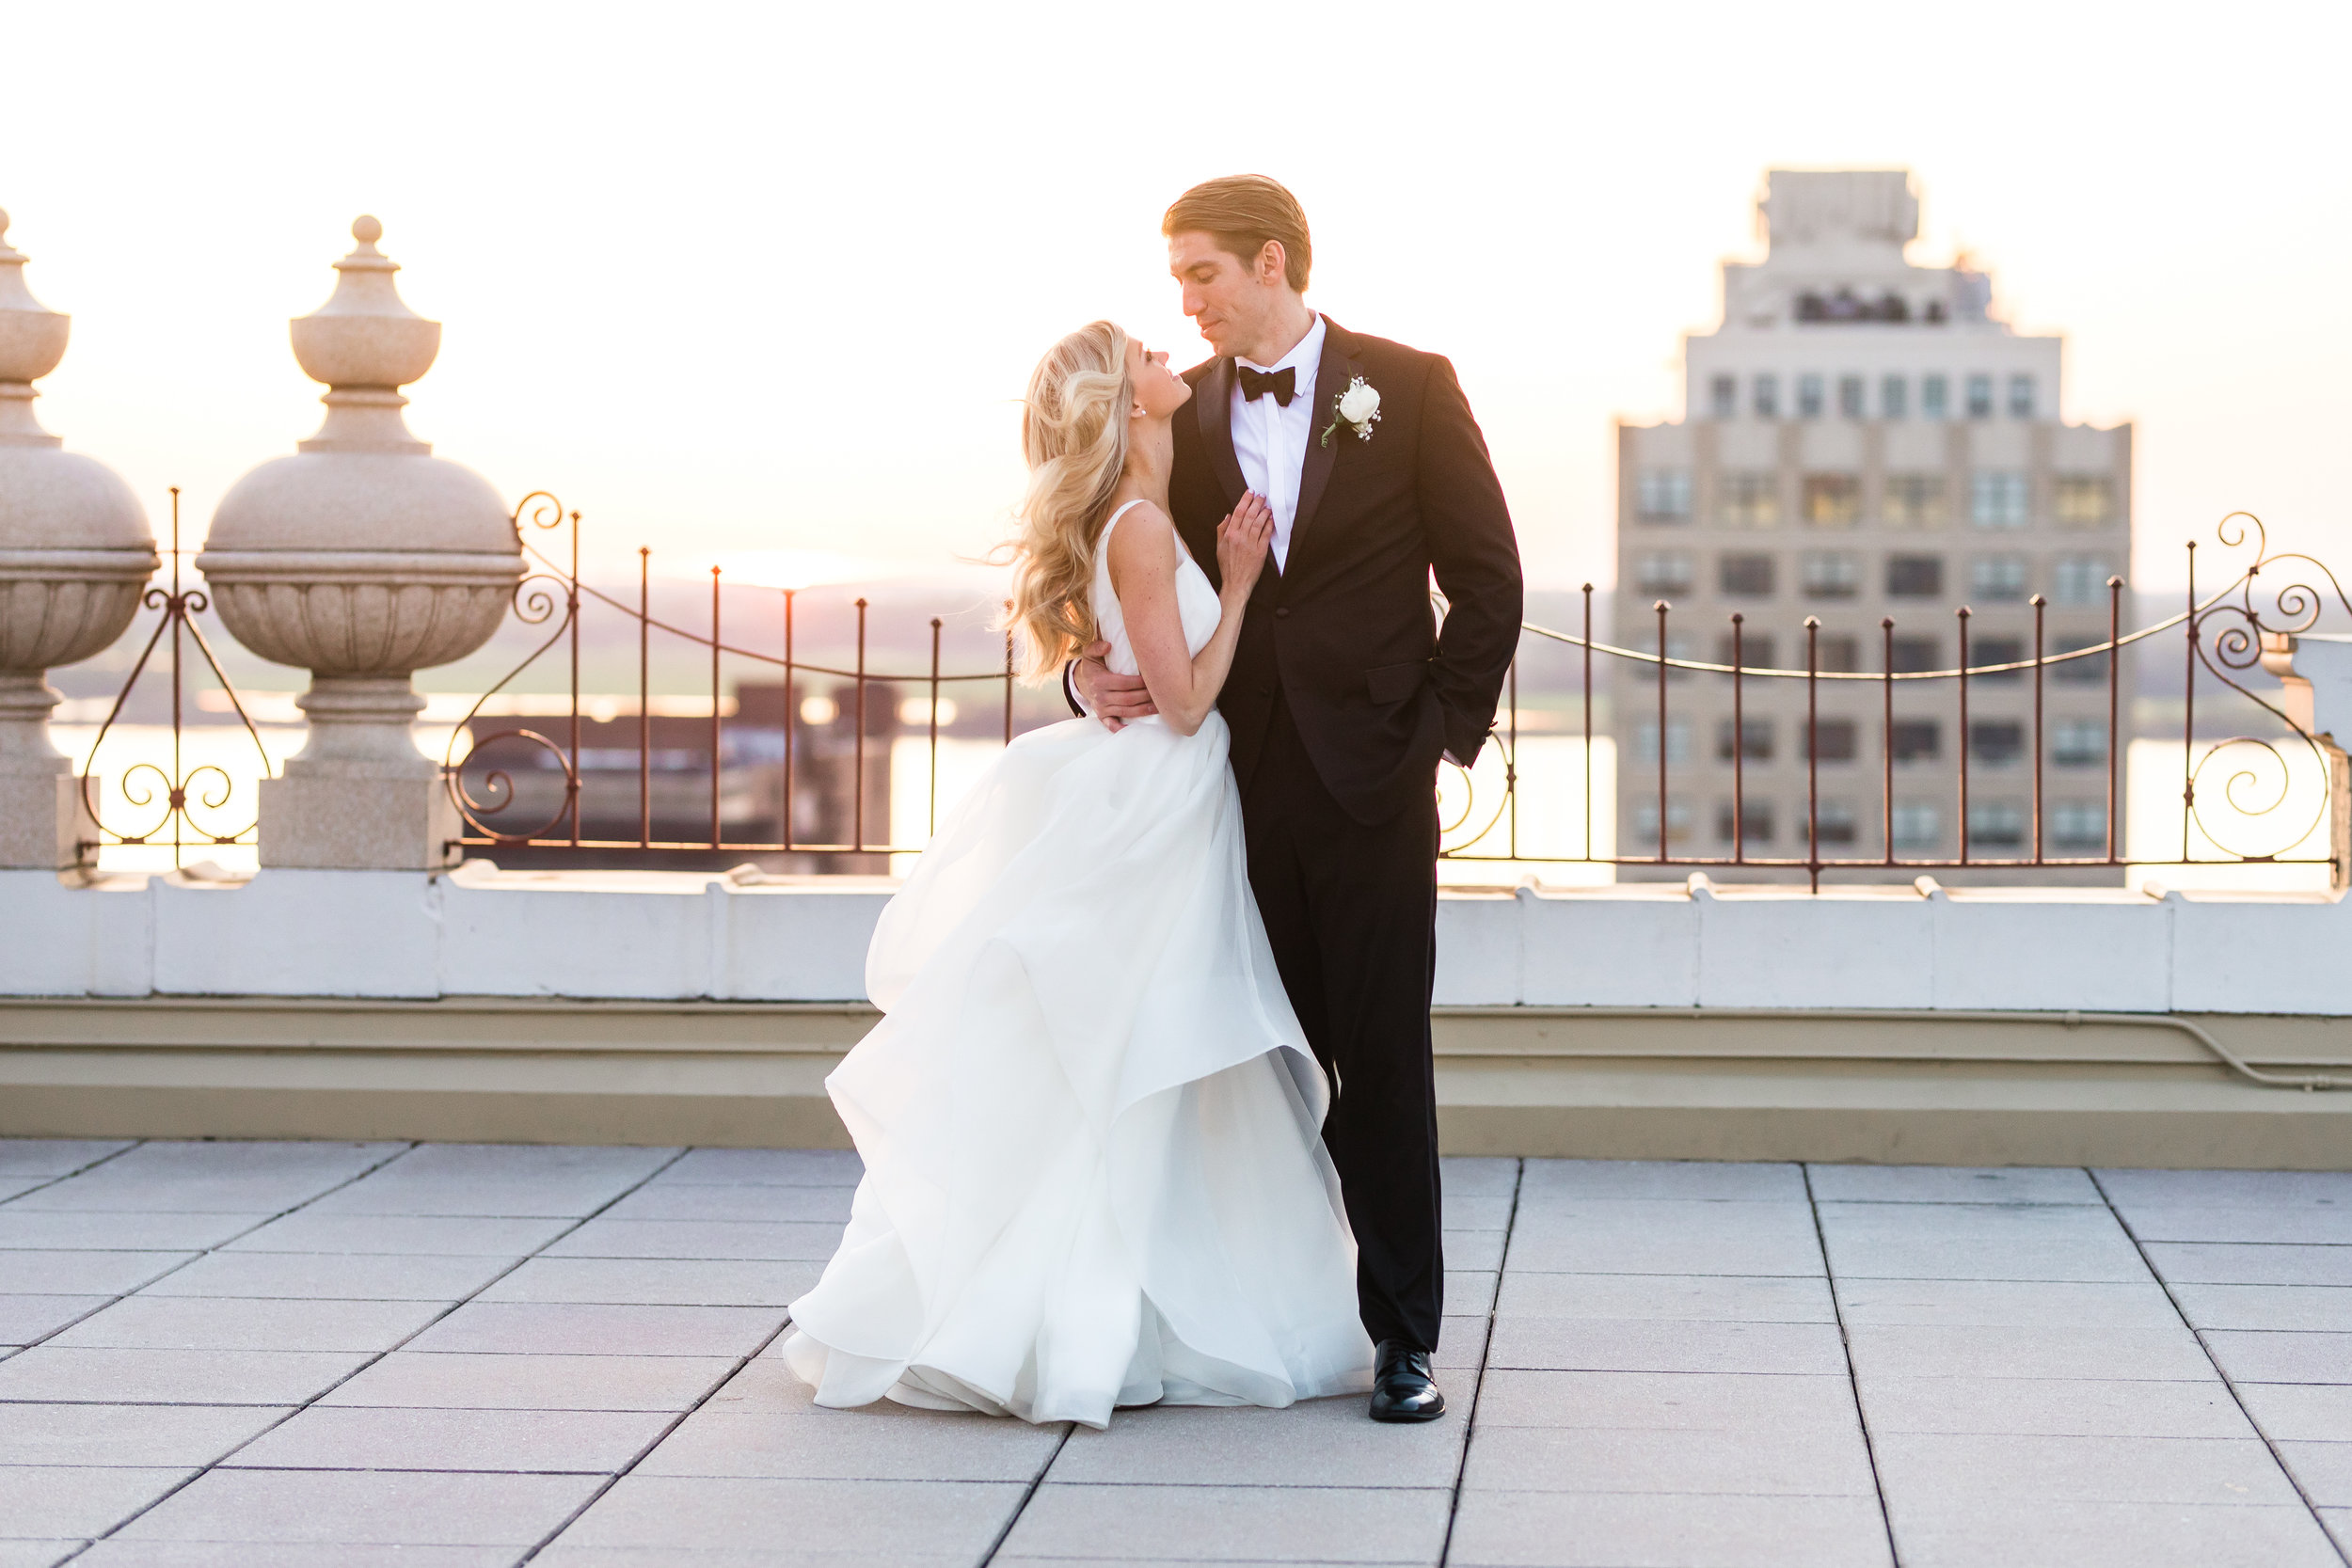 Rooftop Romance: Real Wedding